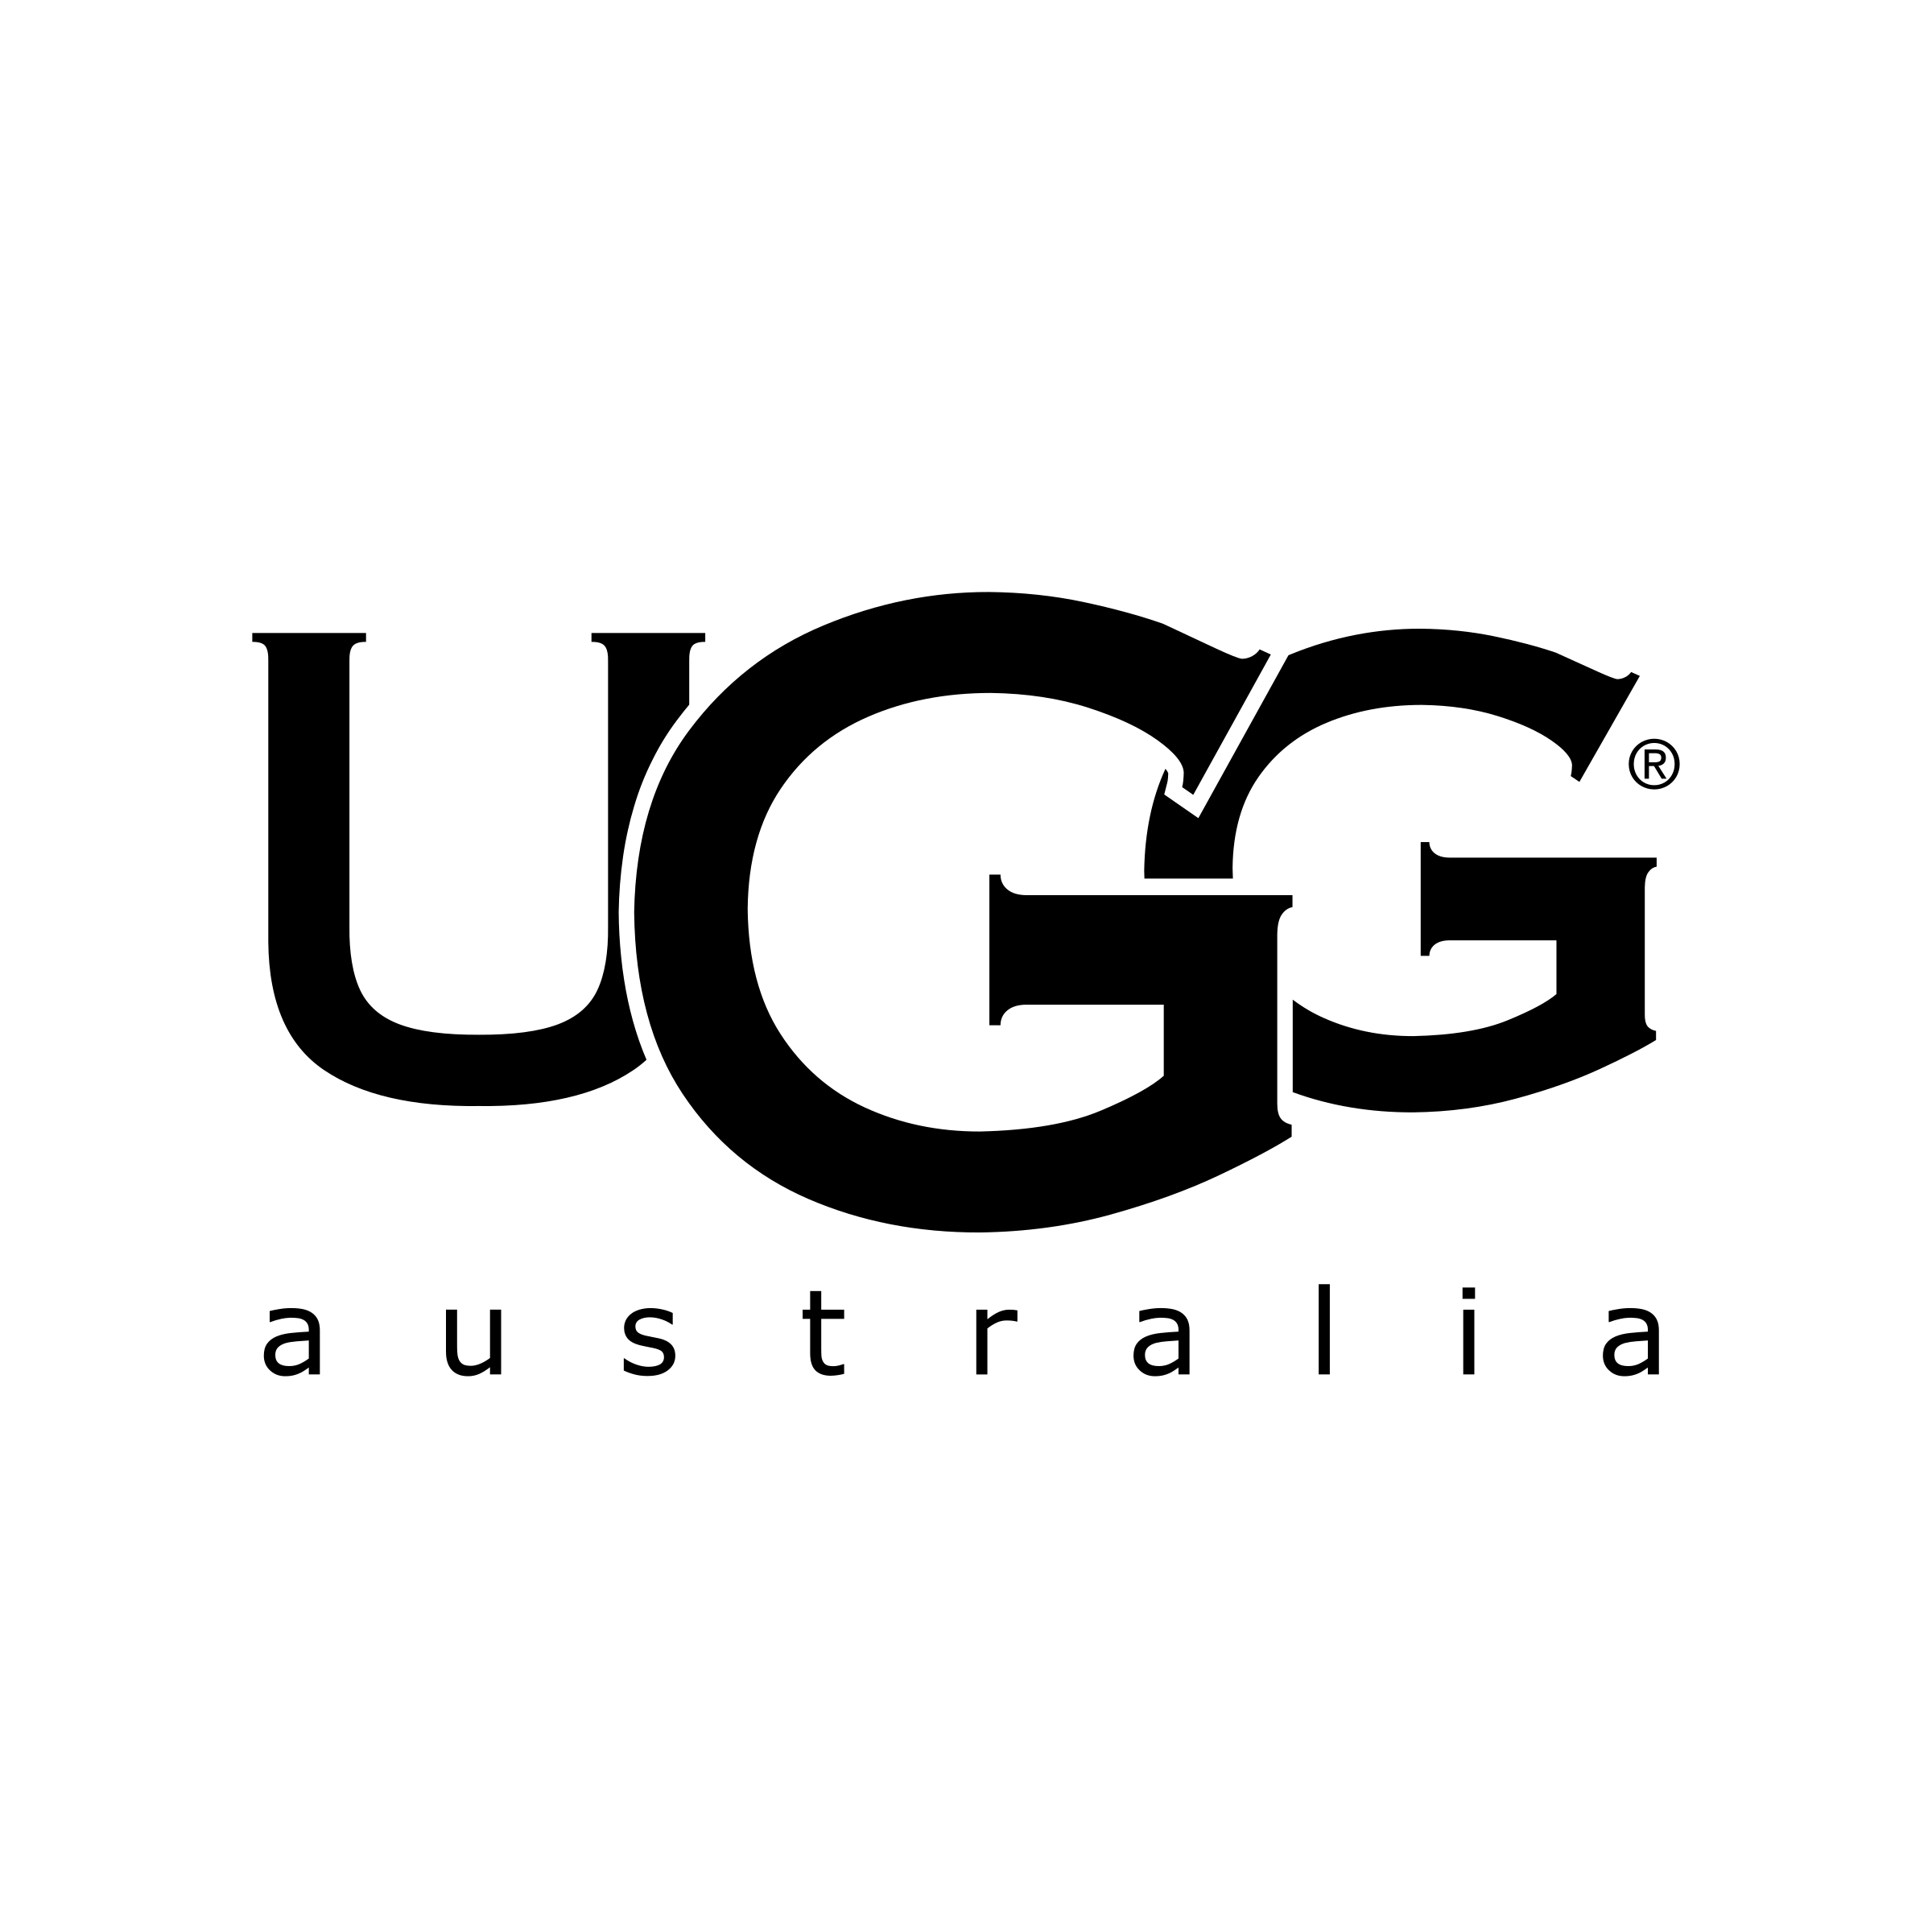 UGG Australia Logo - Ugg Australia Logo PNG Transparent & SVG Vector - Freebie Supply